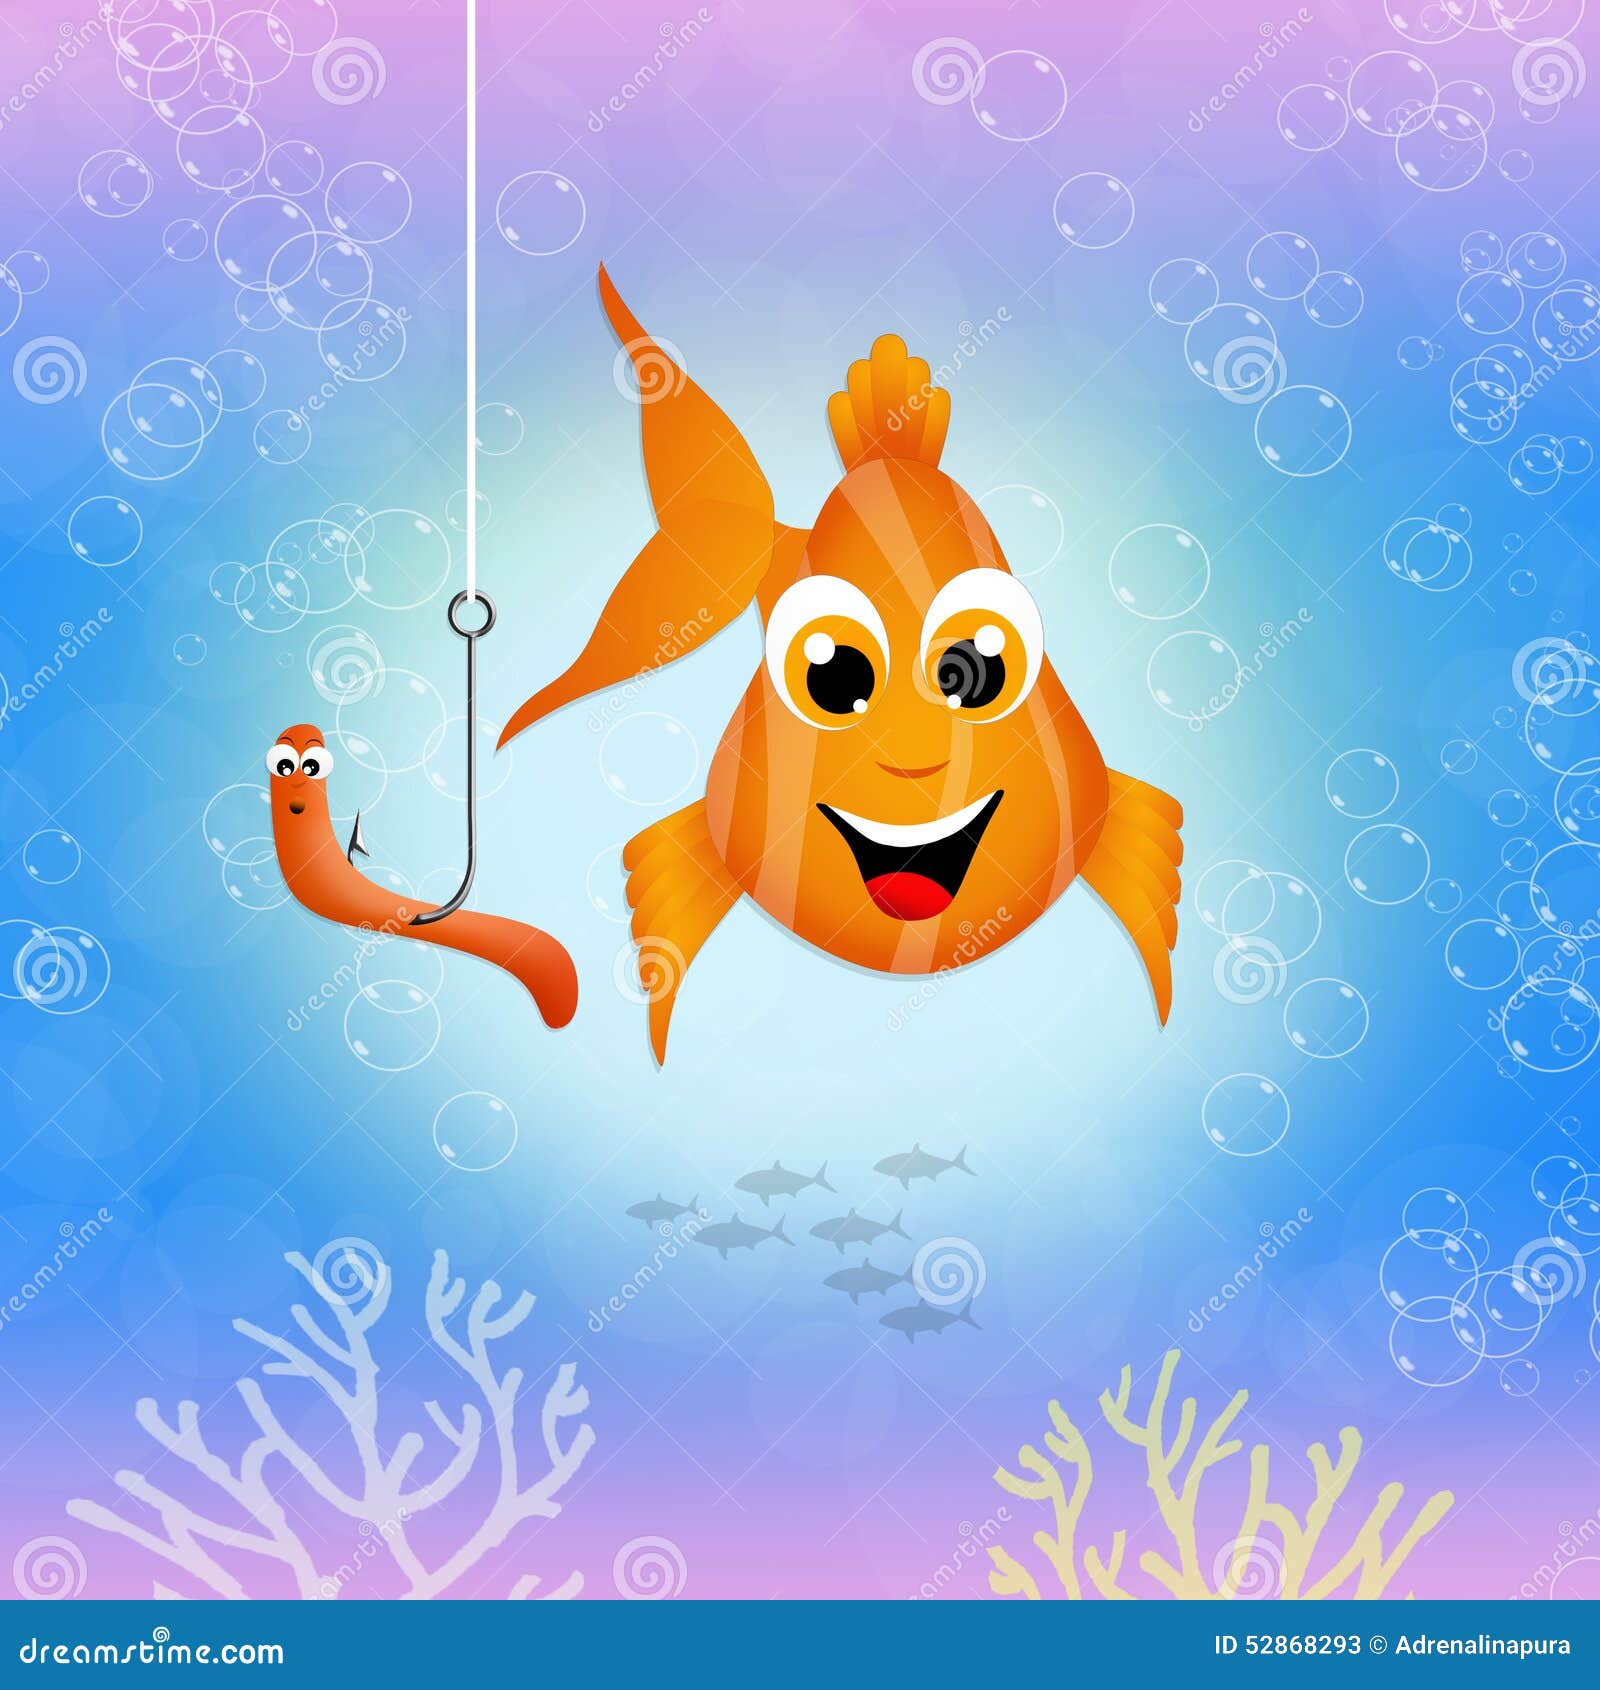 Fish bites the hook stock illustration. Illustration of smile